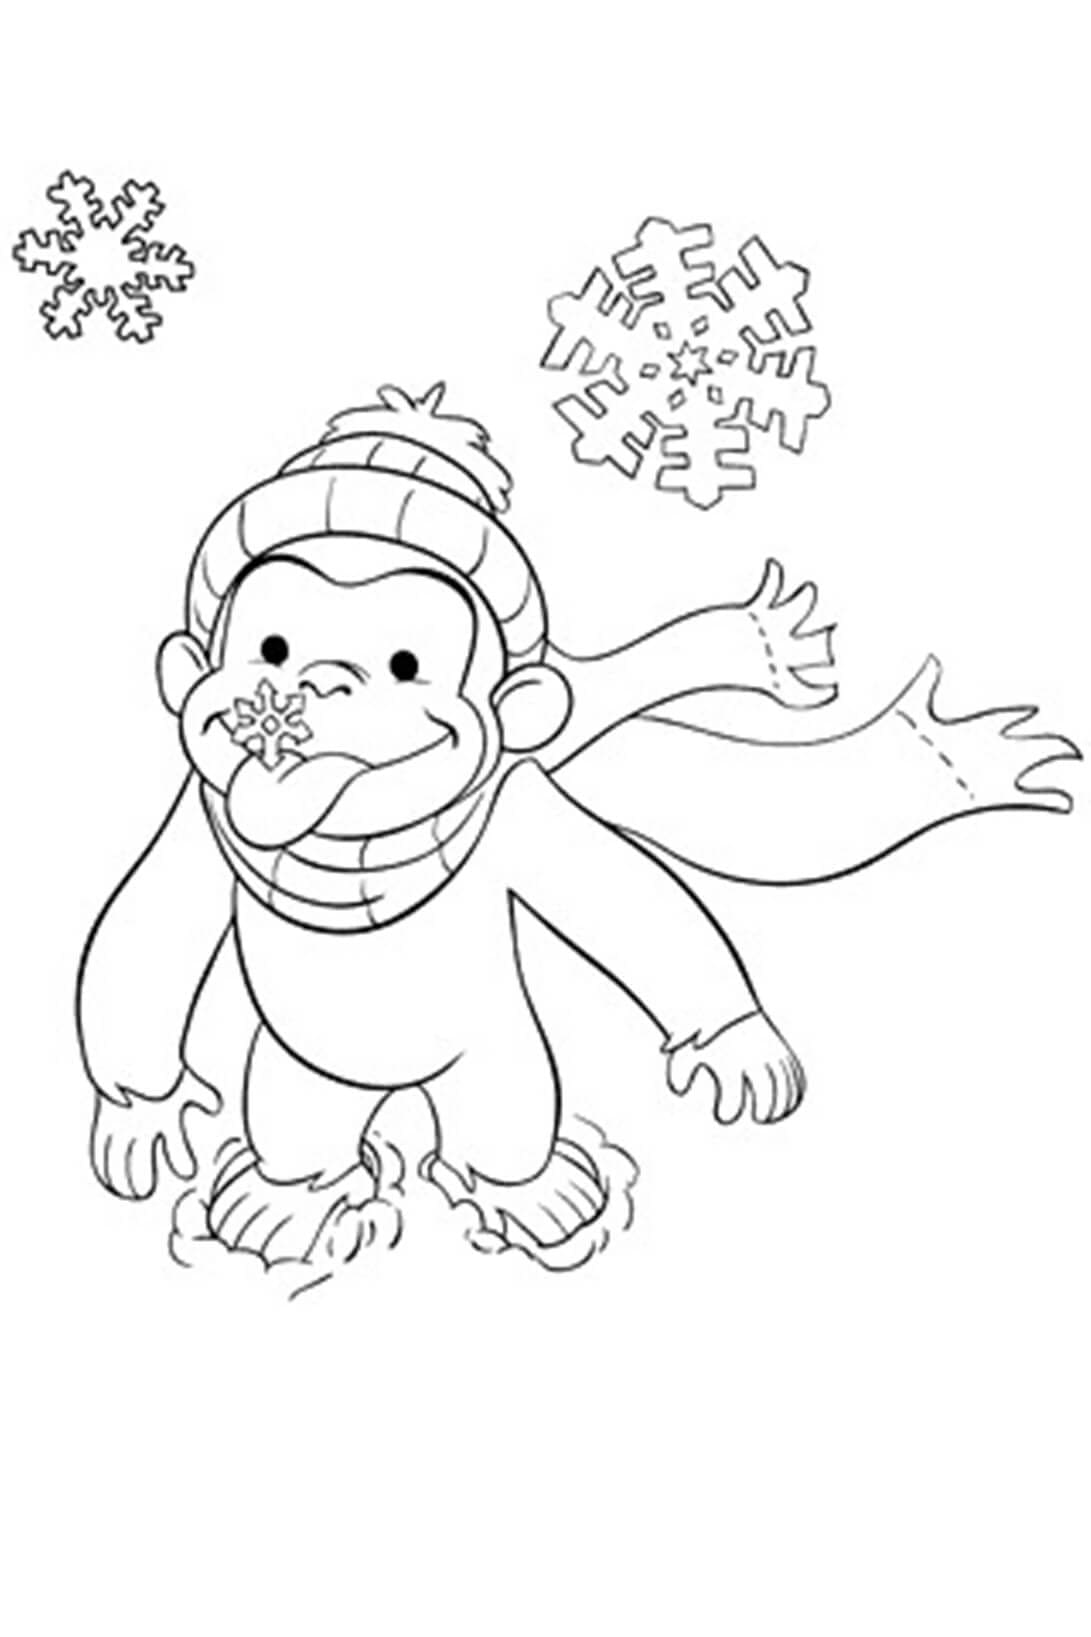 Monkey Tasting Snowflake